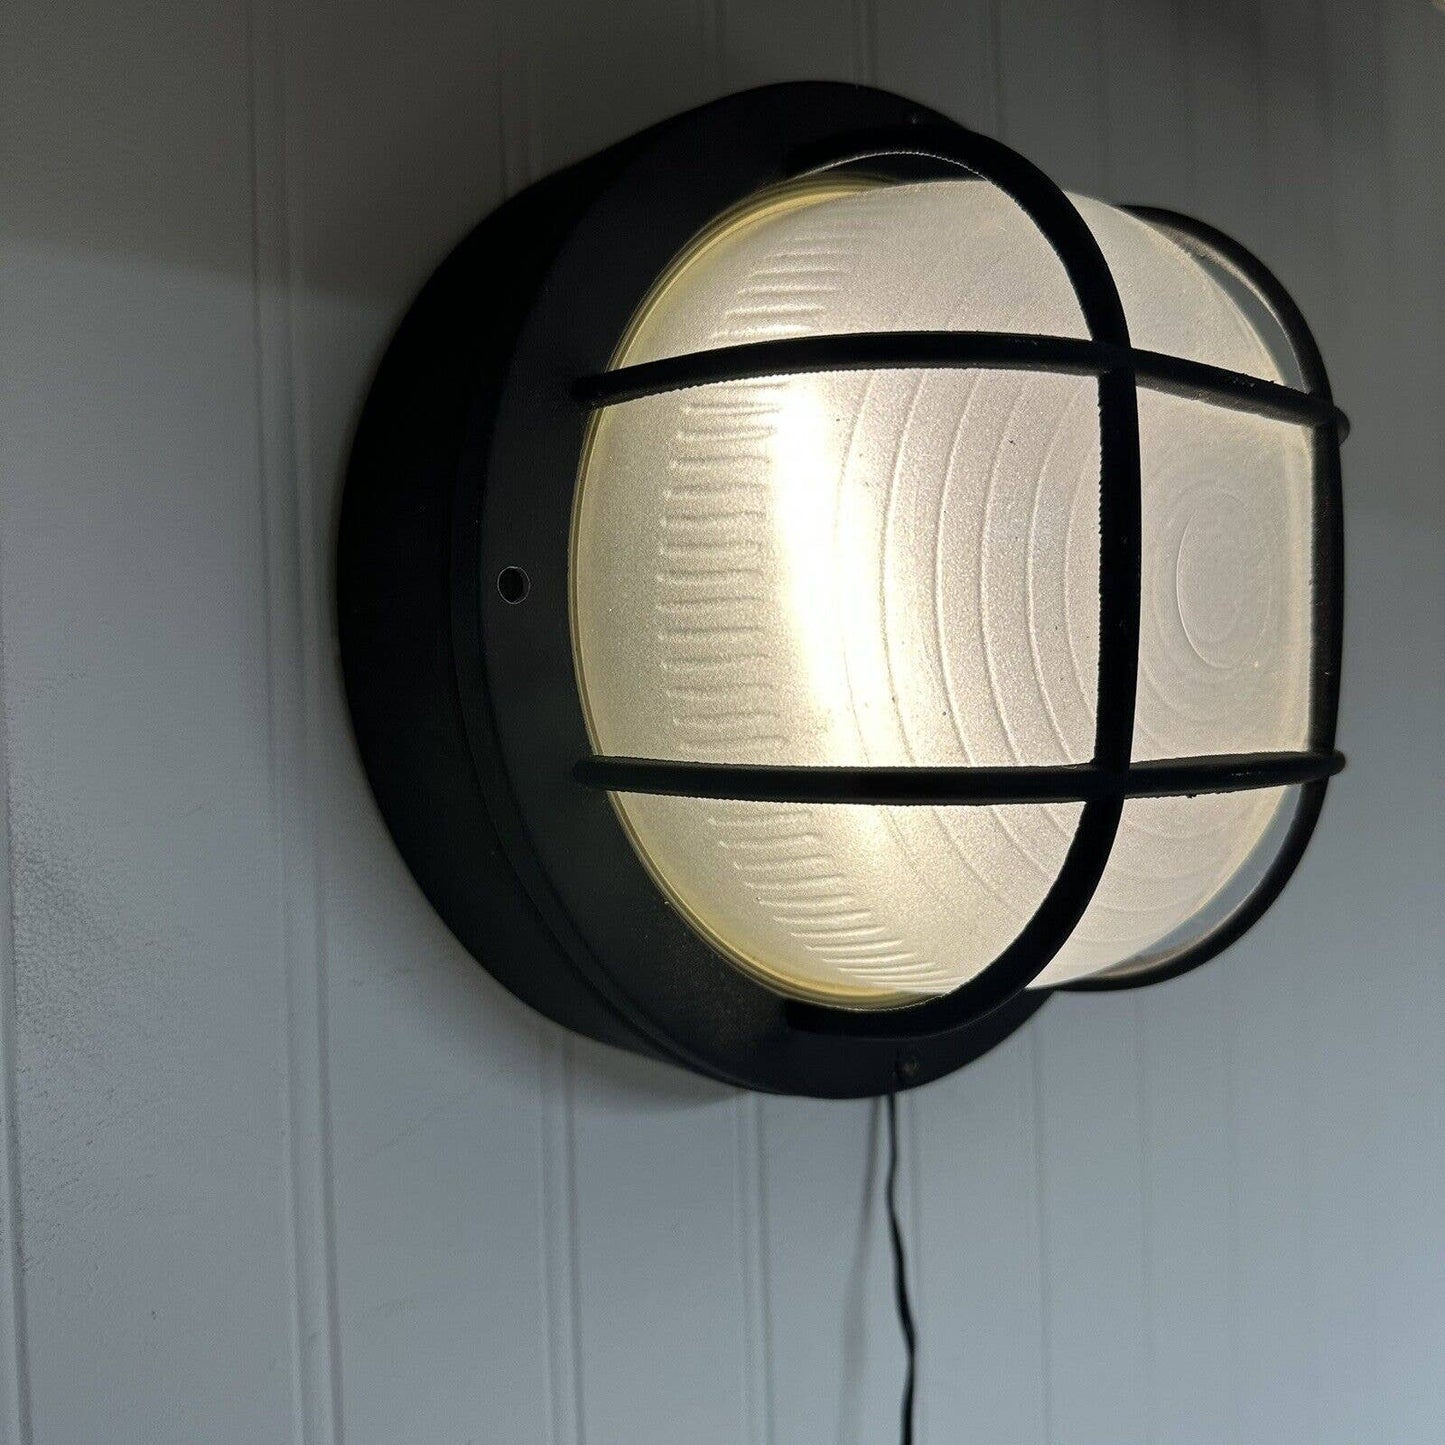 Minispotlight.com 12v 8” Round Caged Light Warm White Haunted House No Box